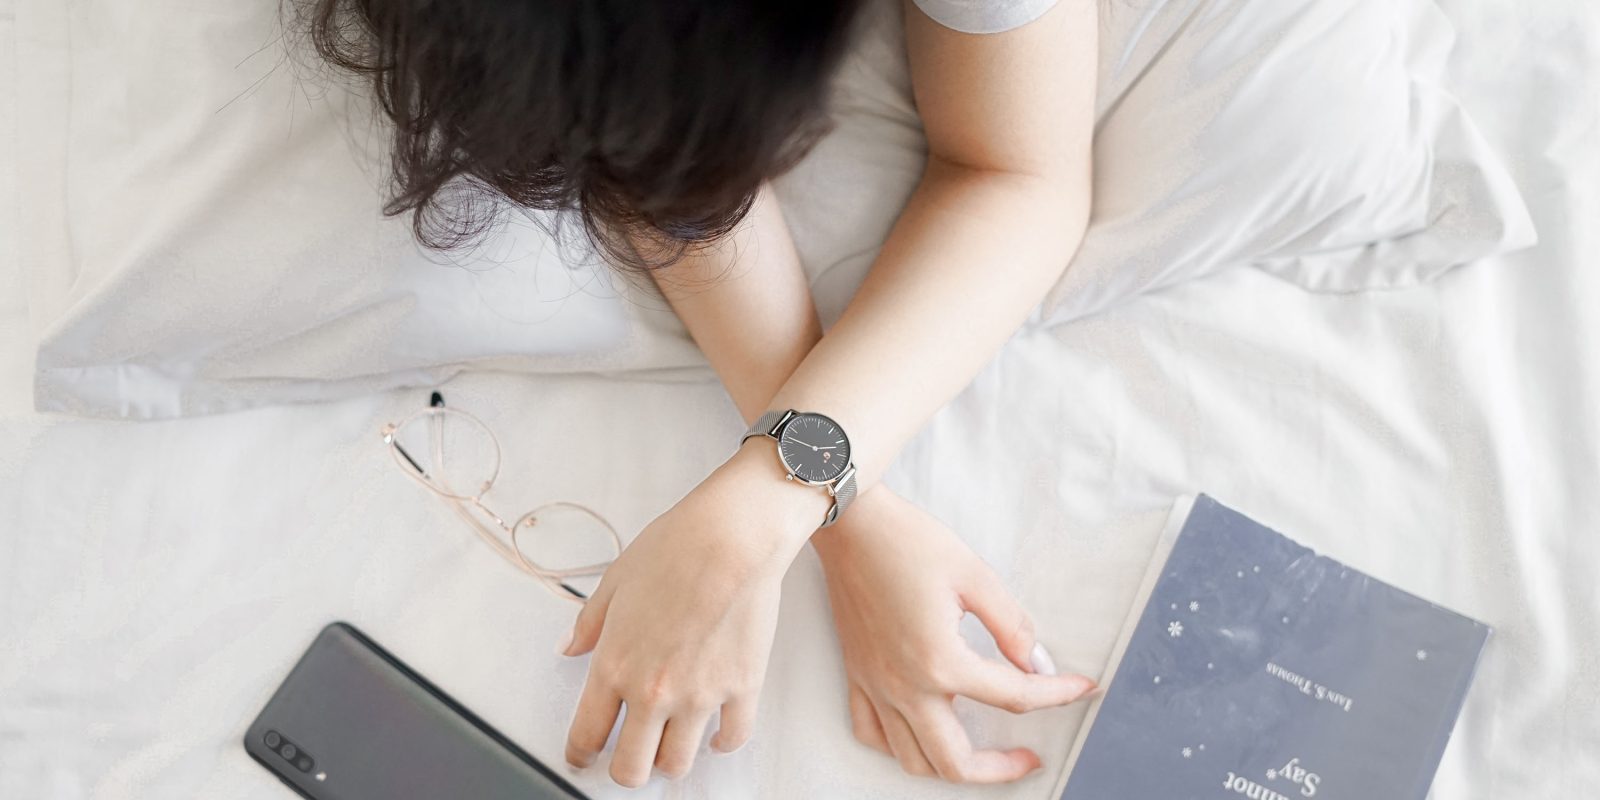 Smartphone addiction affects sleep says study